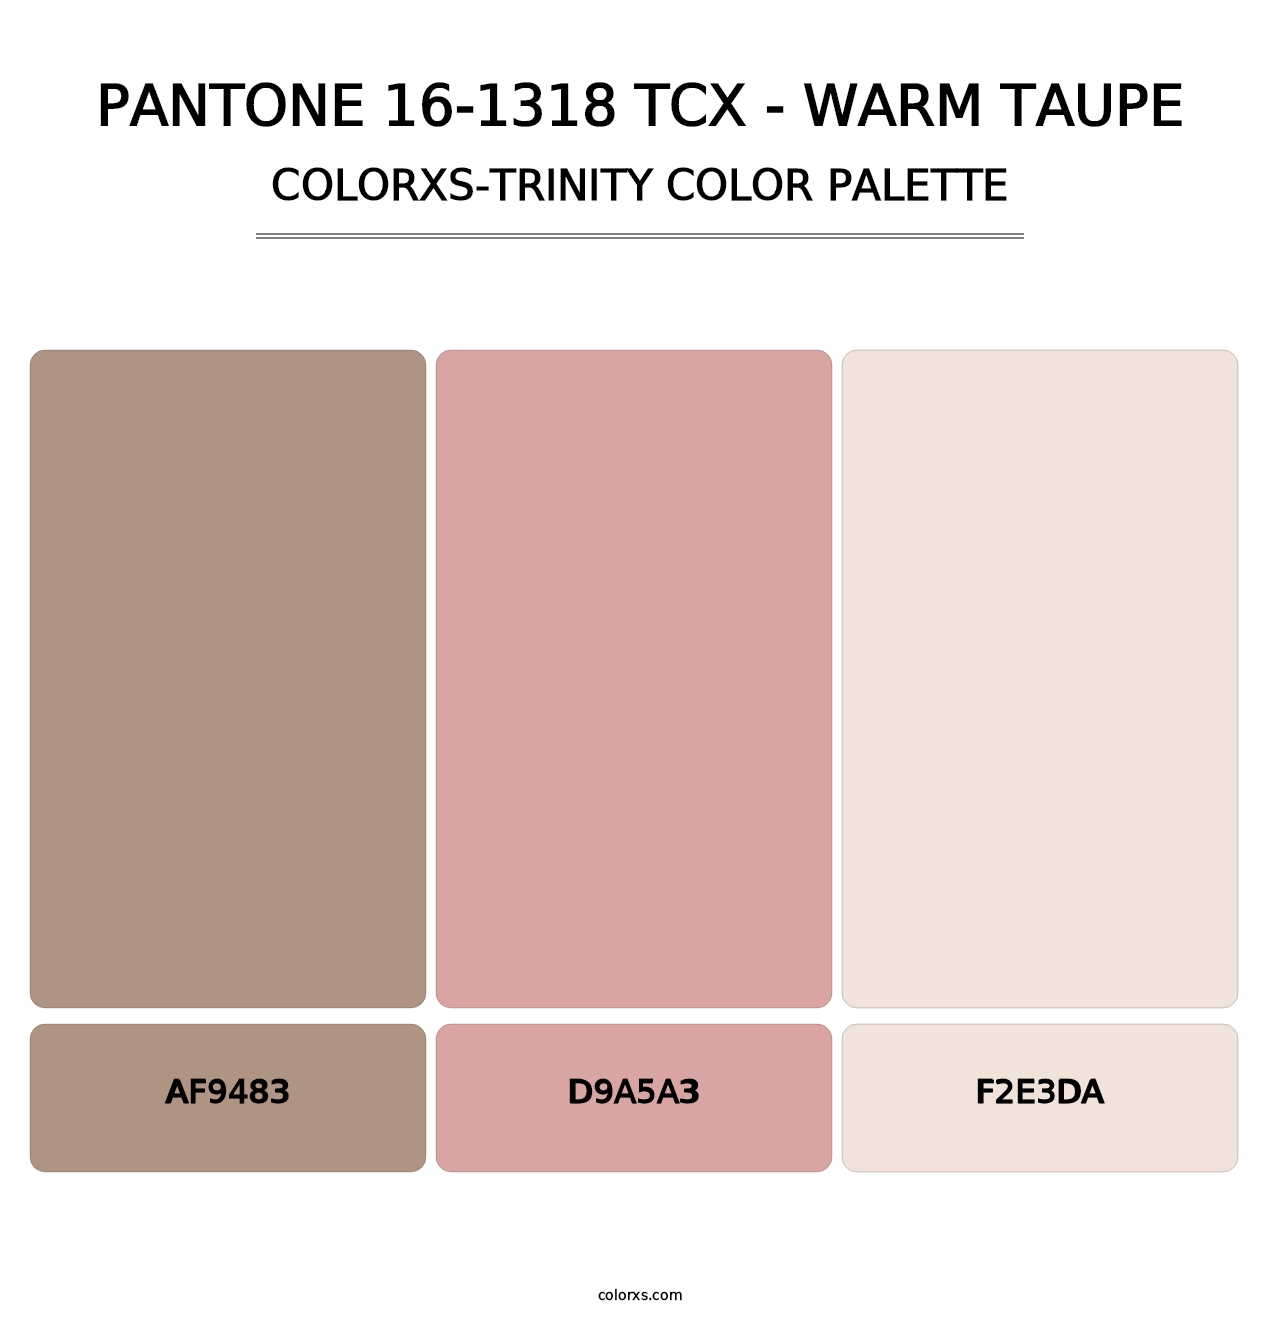 PANTONE 16-1318 TCX - Warm Taupe - Colorxs Trinity Palette